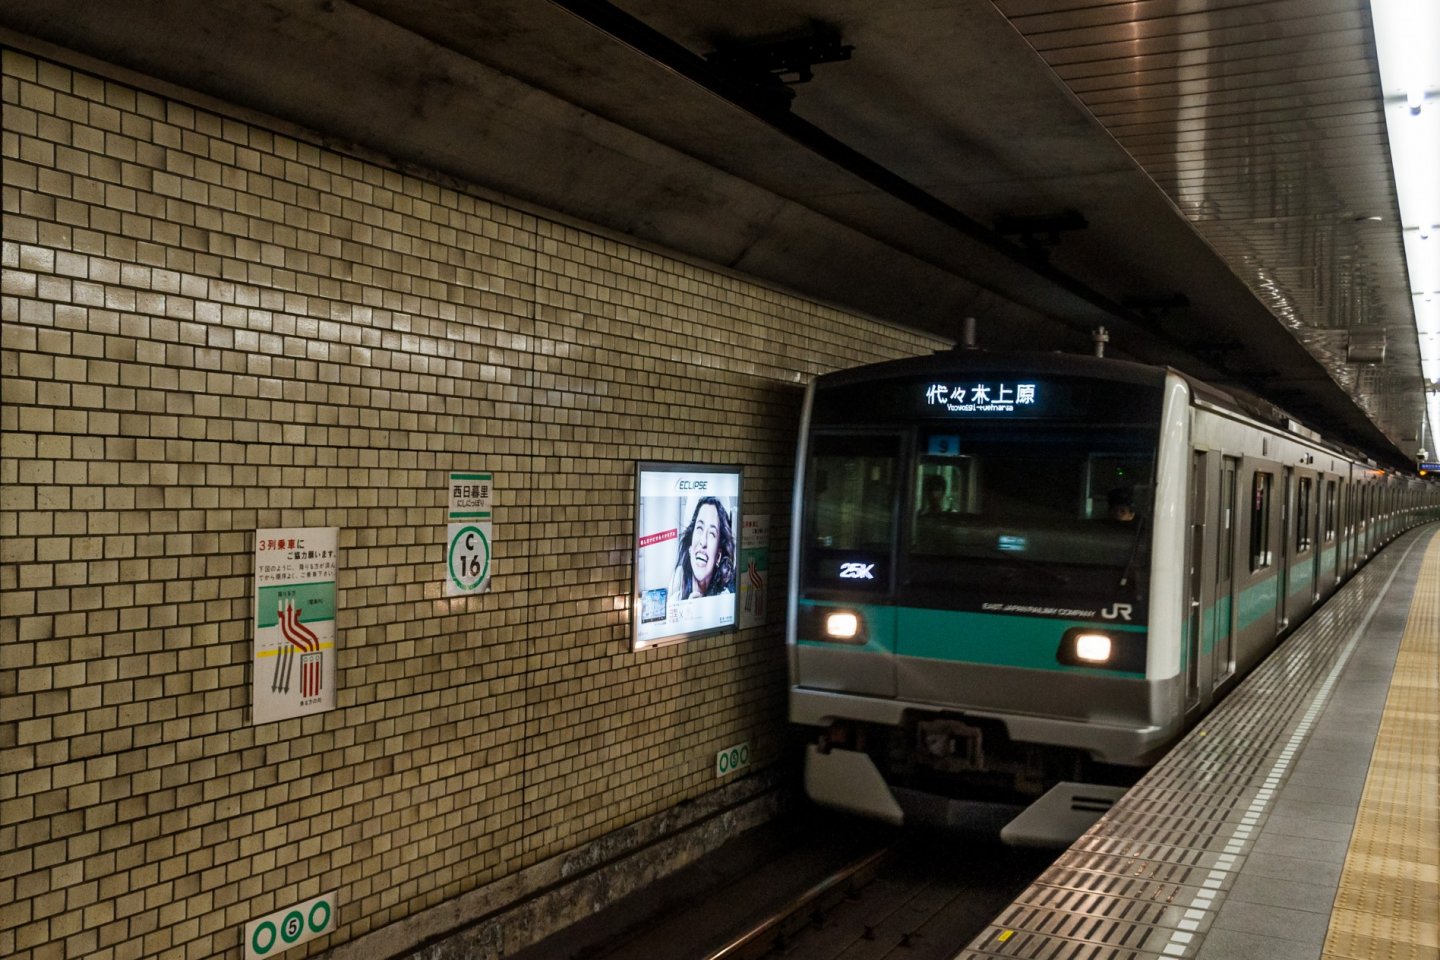 The trains on platform 1 head to Yoyogi-Uehara